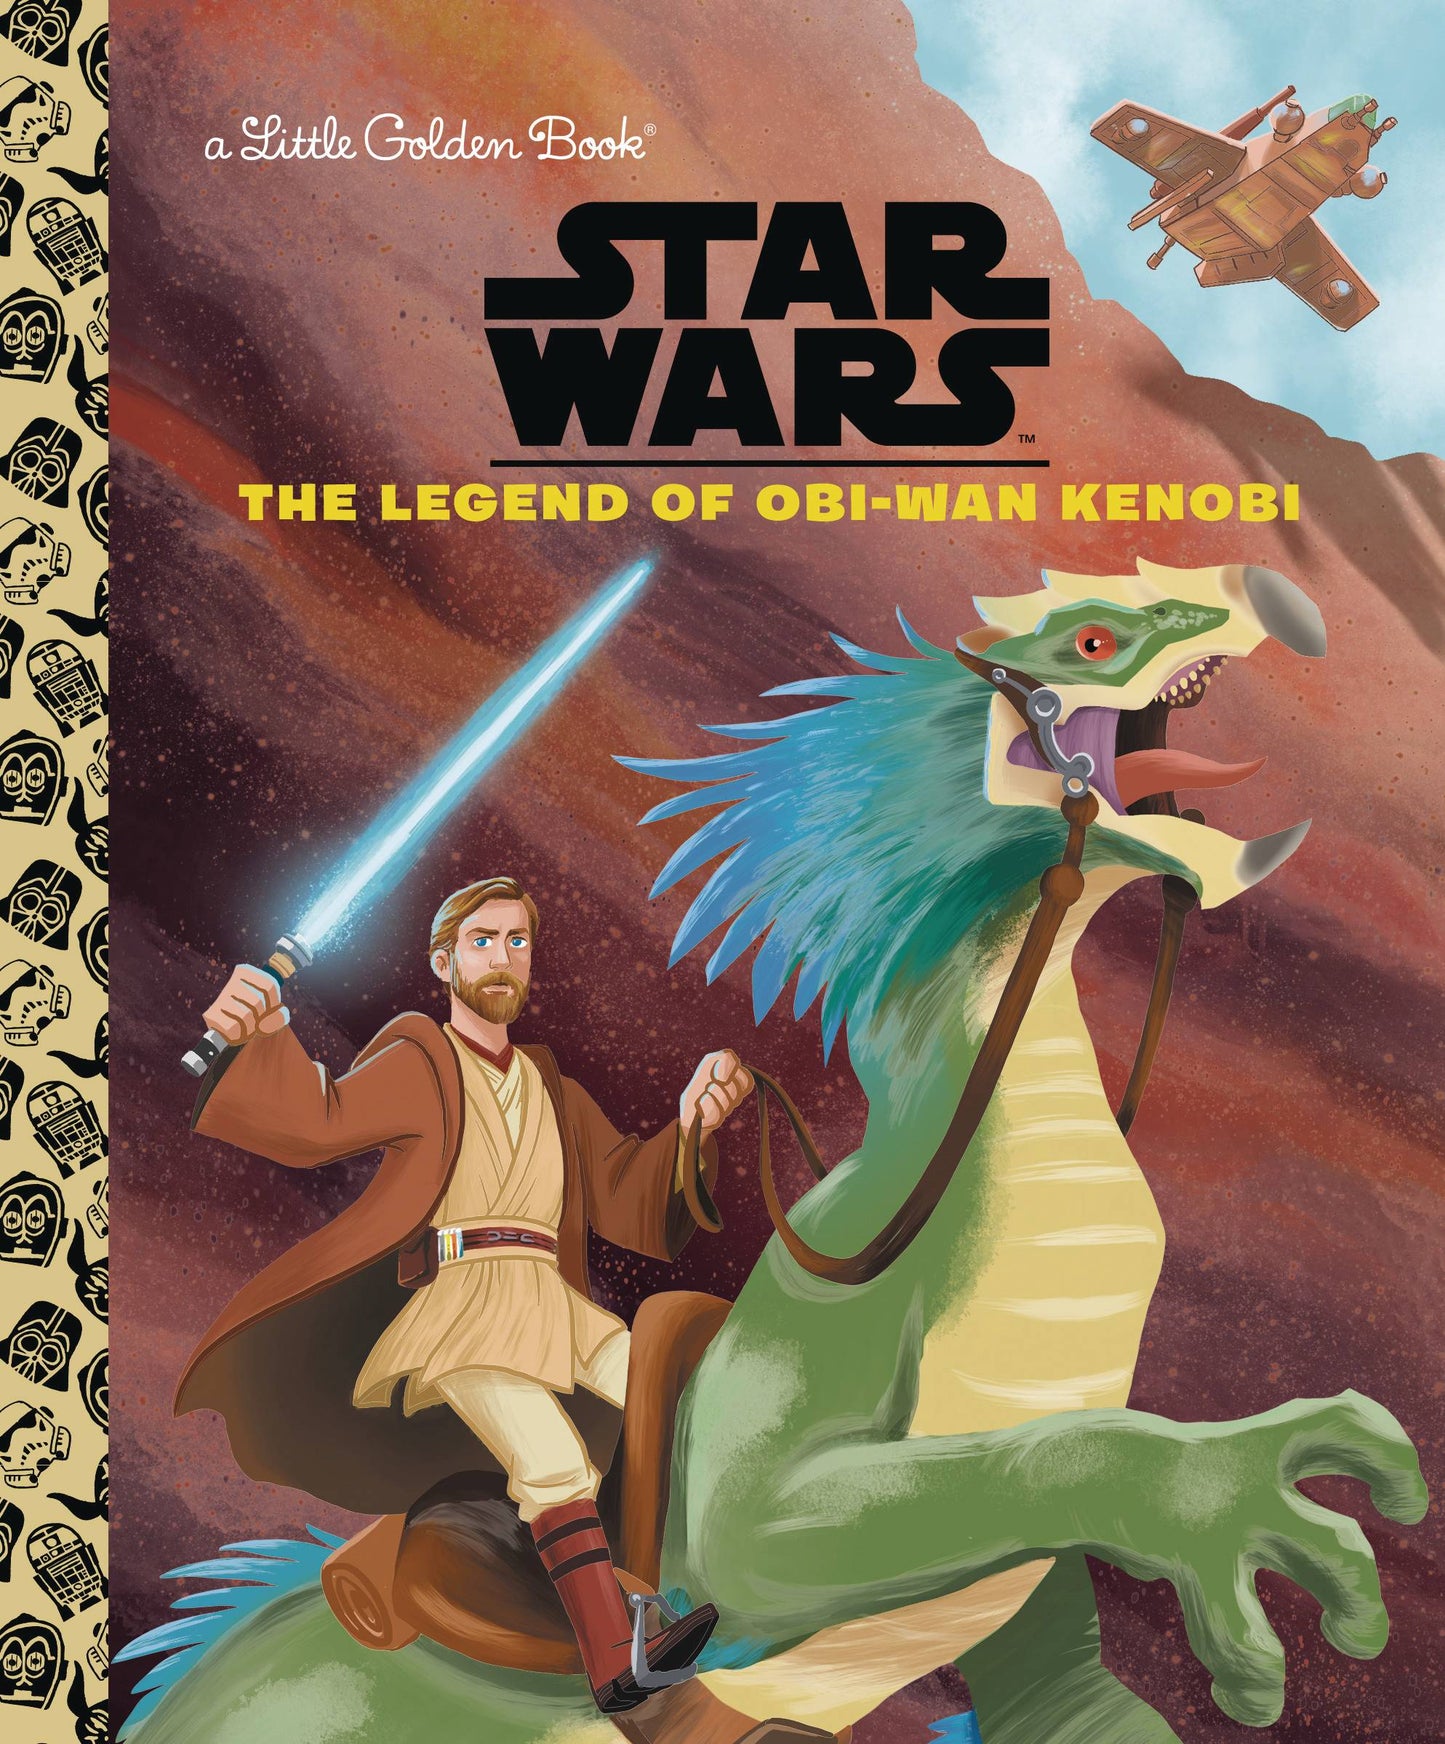 Little Golden Book Star Wars The Legend of Obi-Wan Kenobi